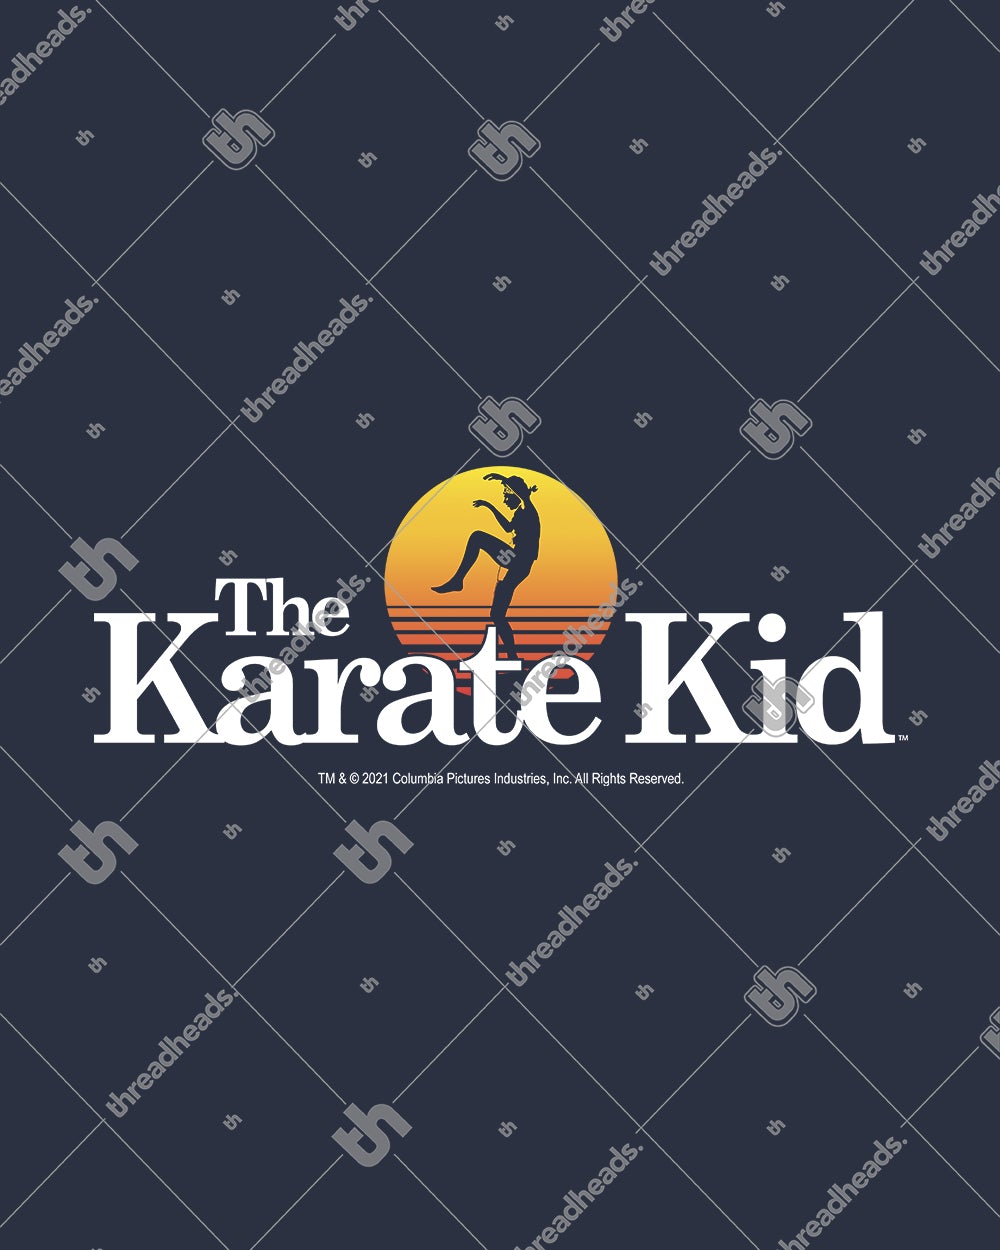 Karate Kid Logo Long Sleeve Australia Online #colour_navy